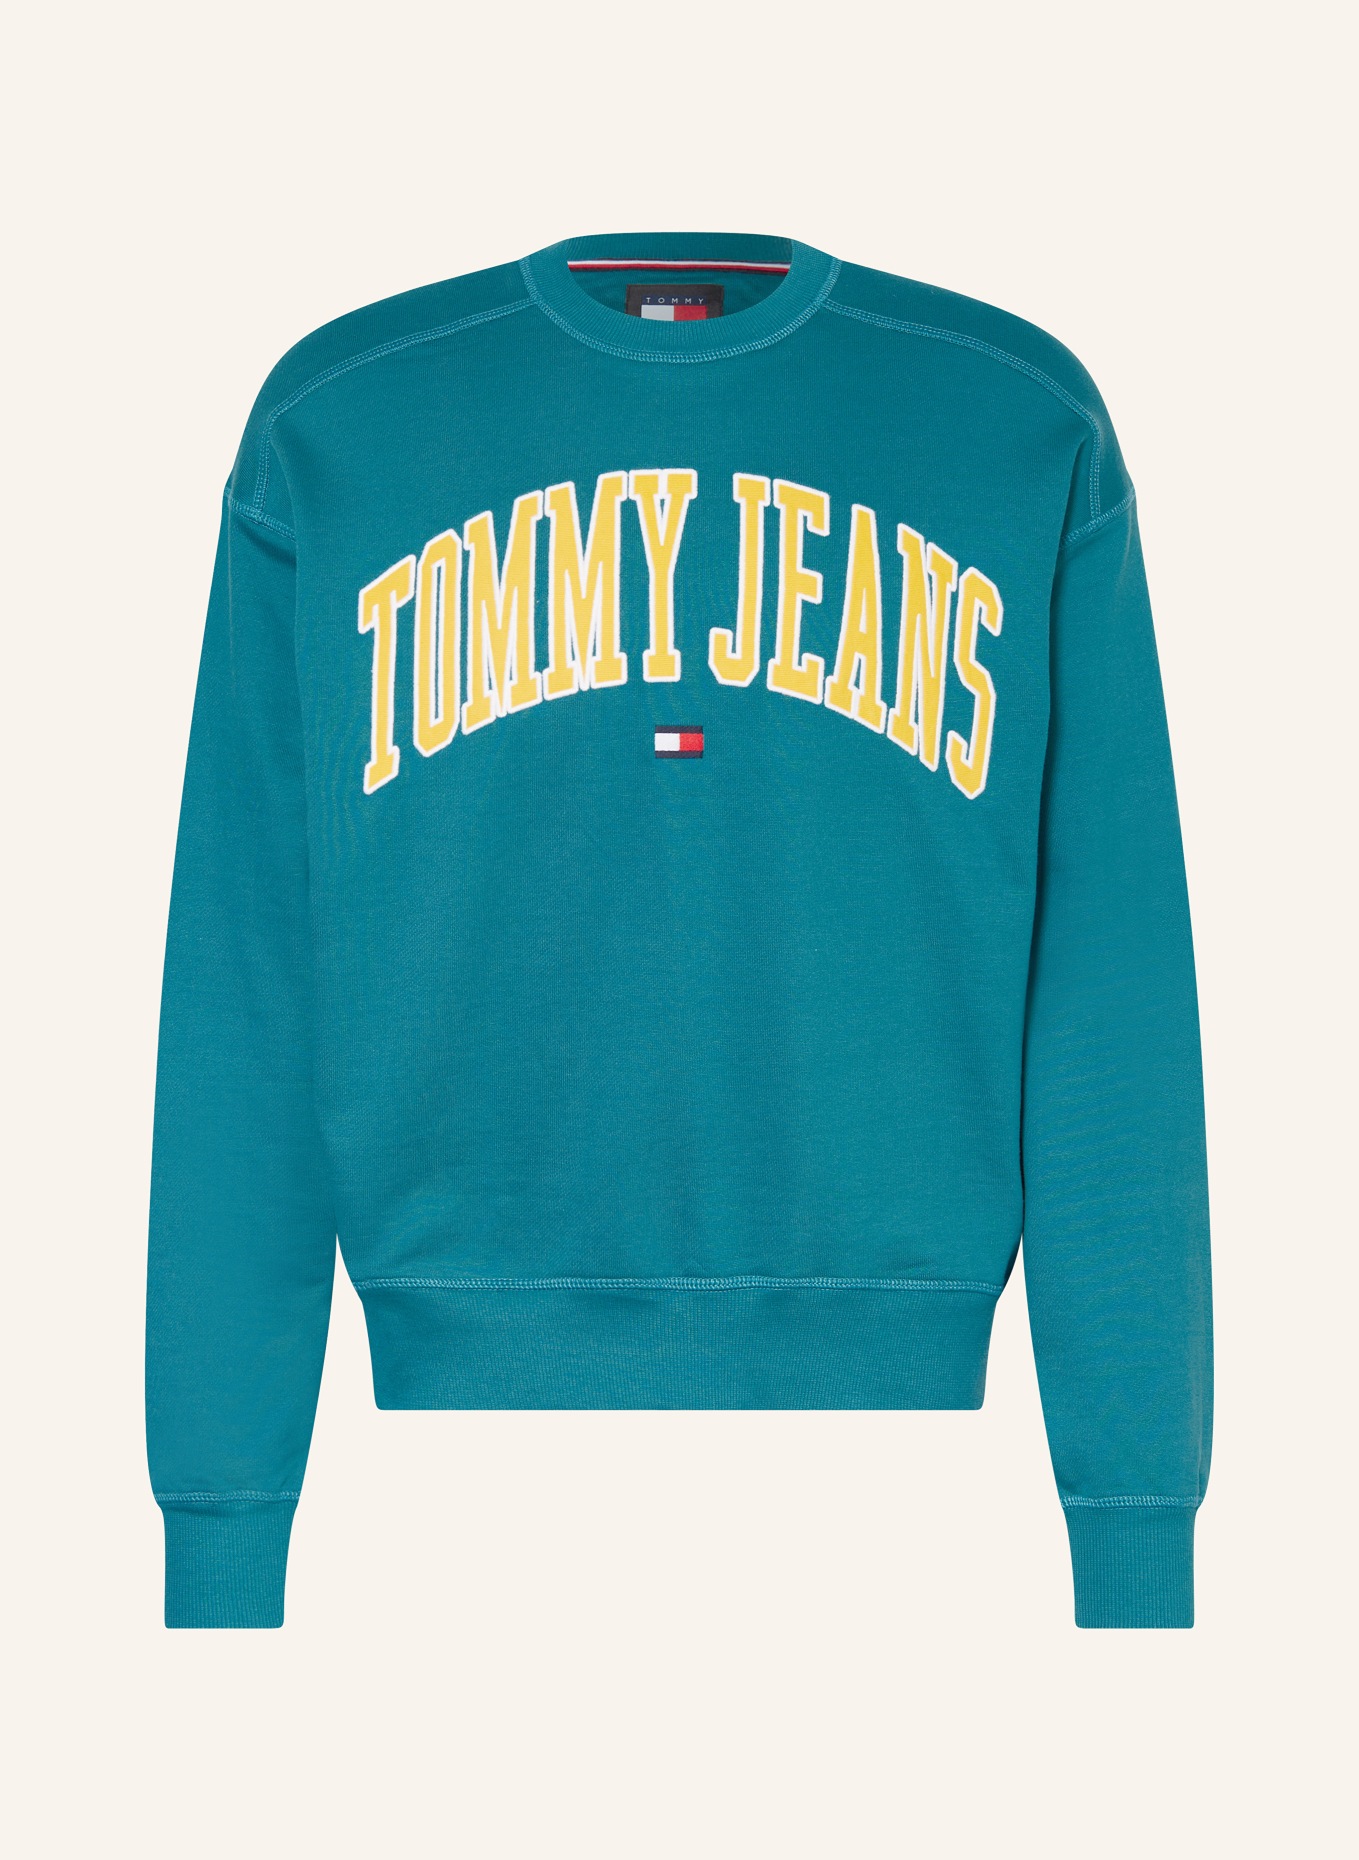 TOMMY JEANS Sweatshirt, Farbe: PETROL (Bild 1)